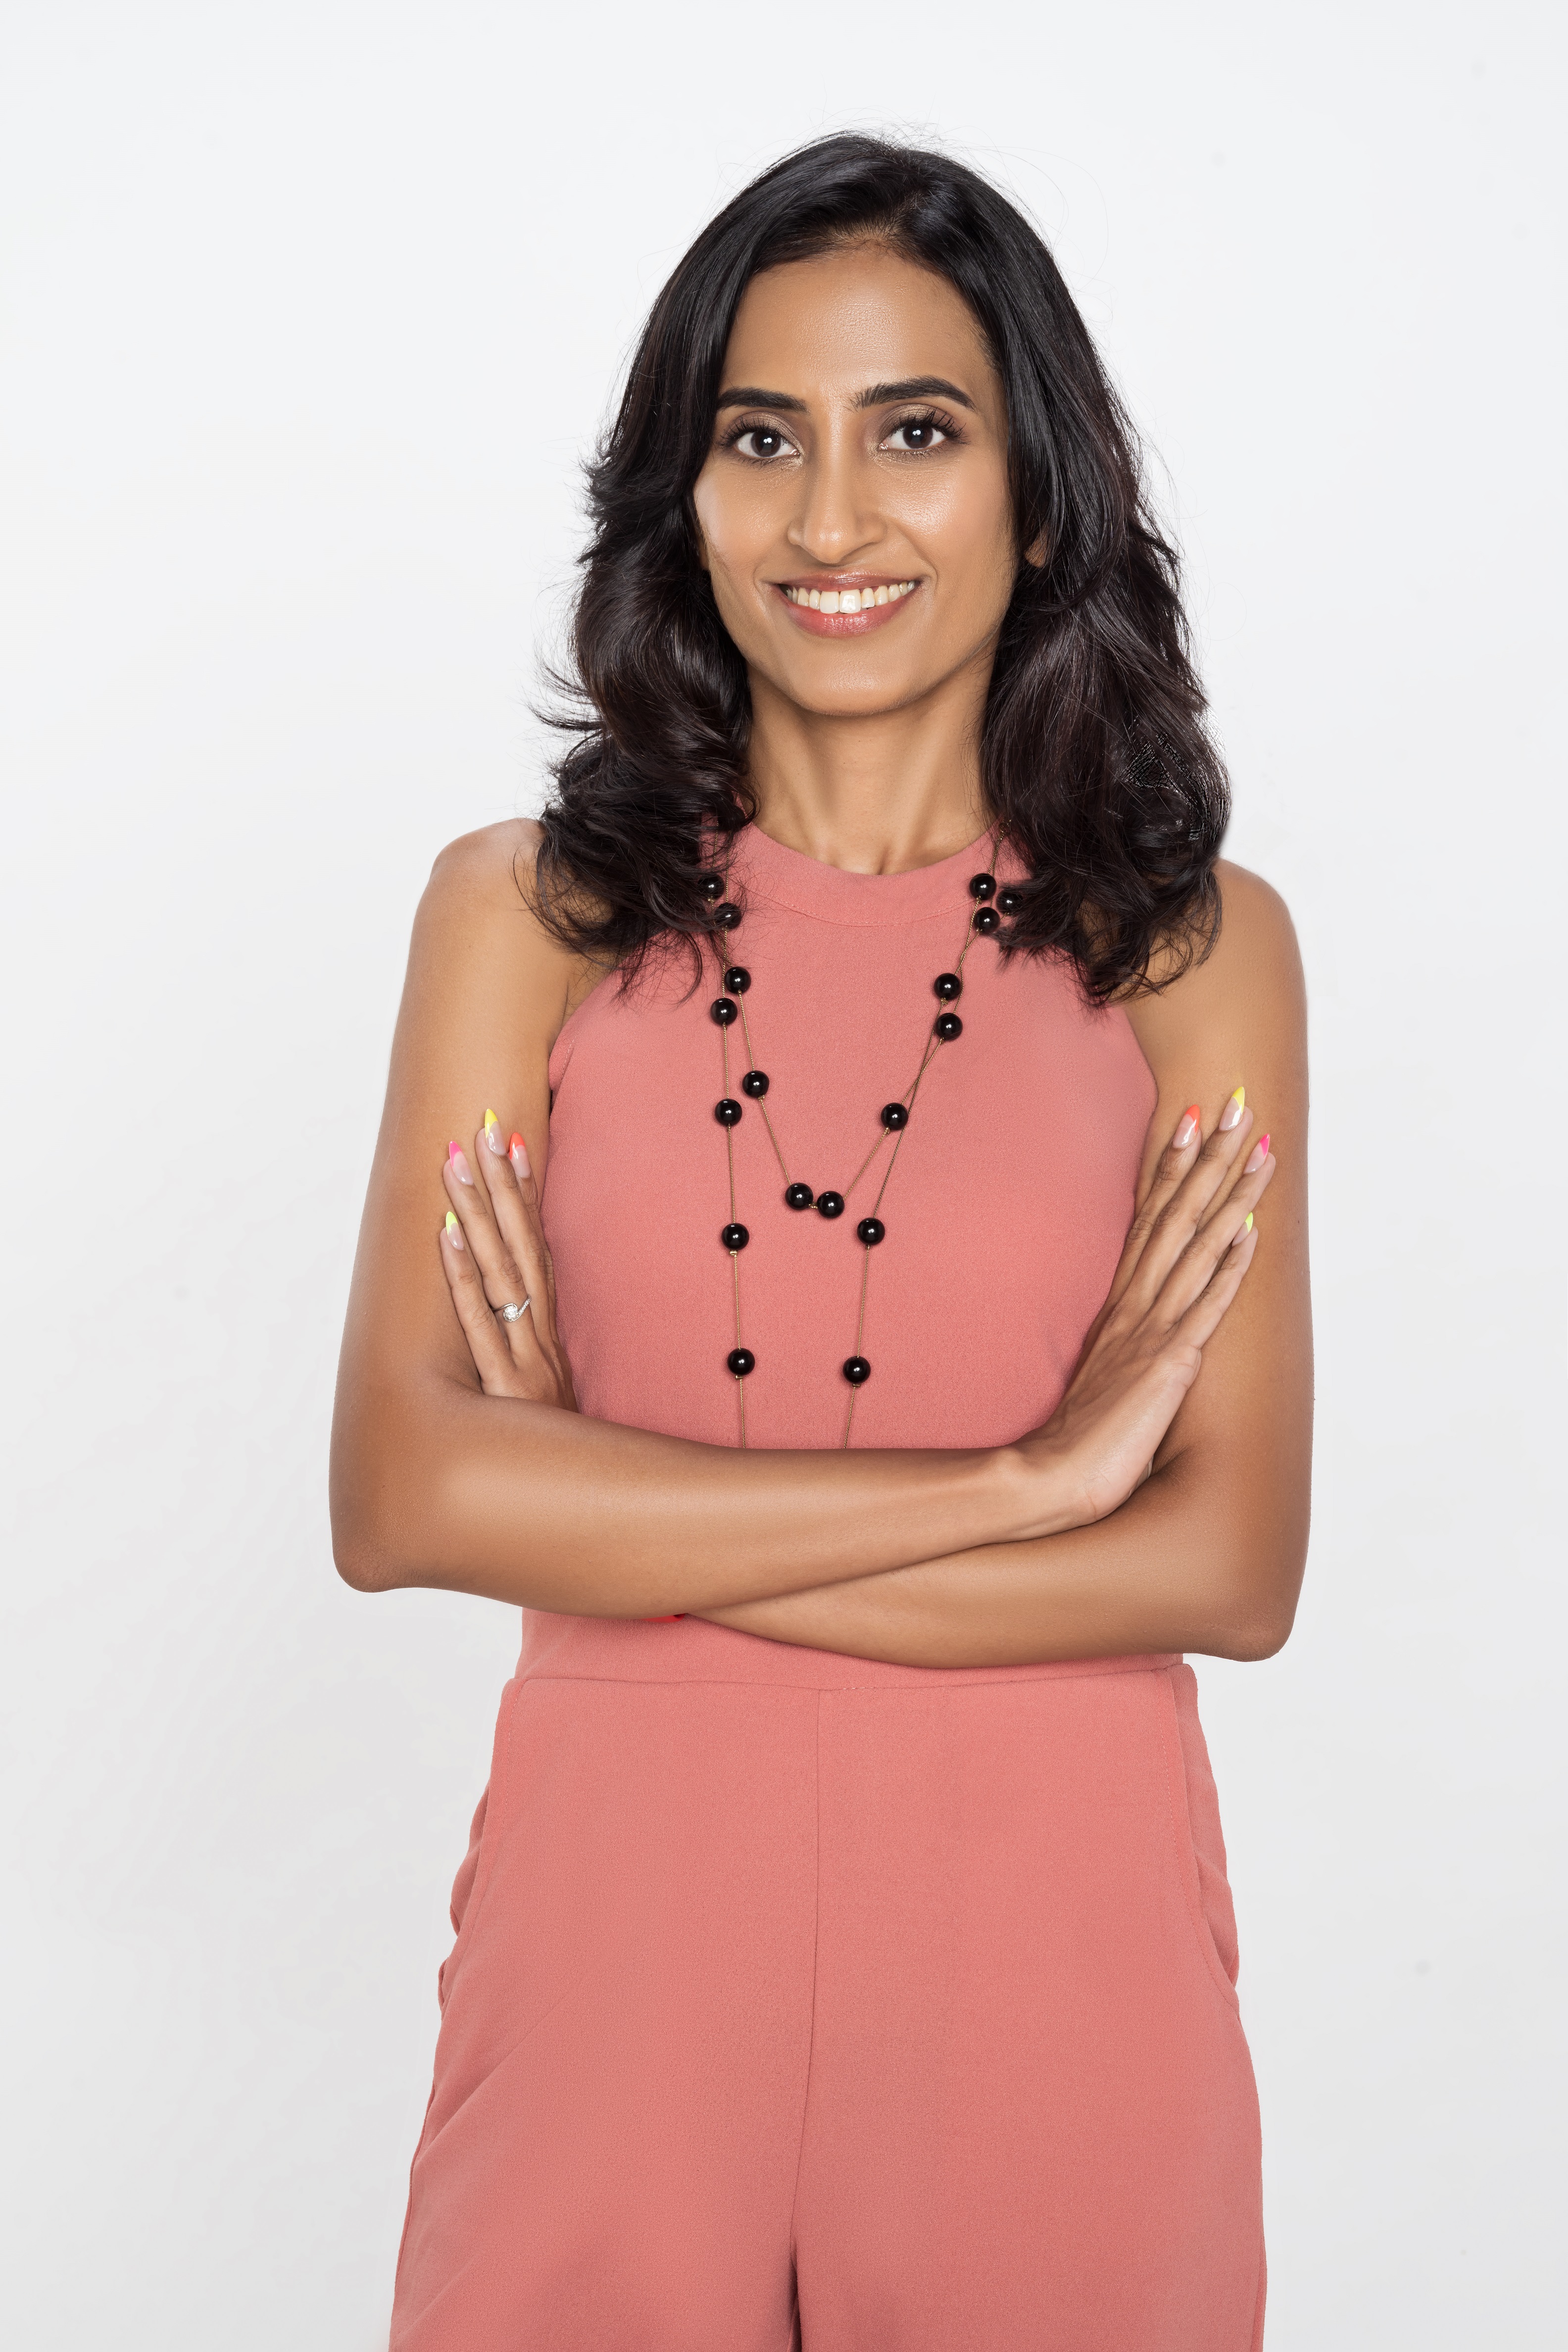 Vineeta Singh, <span> CEO & Co-founder, SUGAR Cosmetics</span>